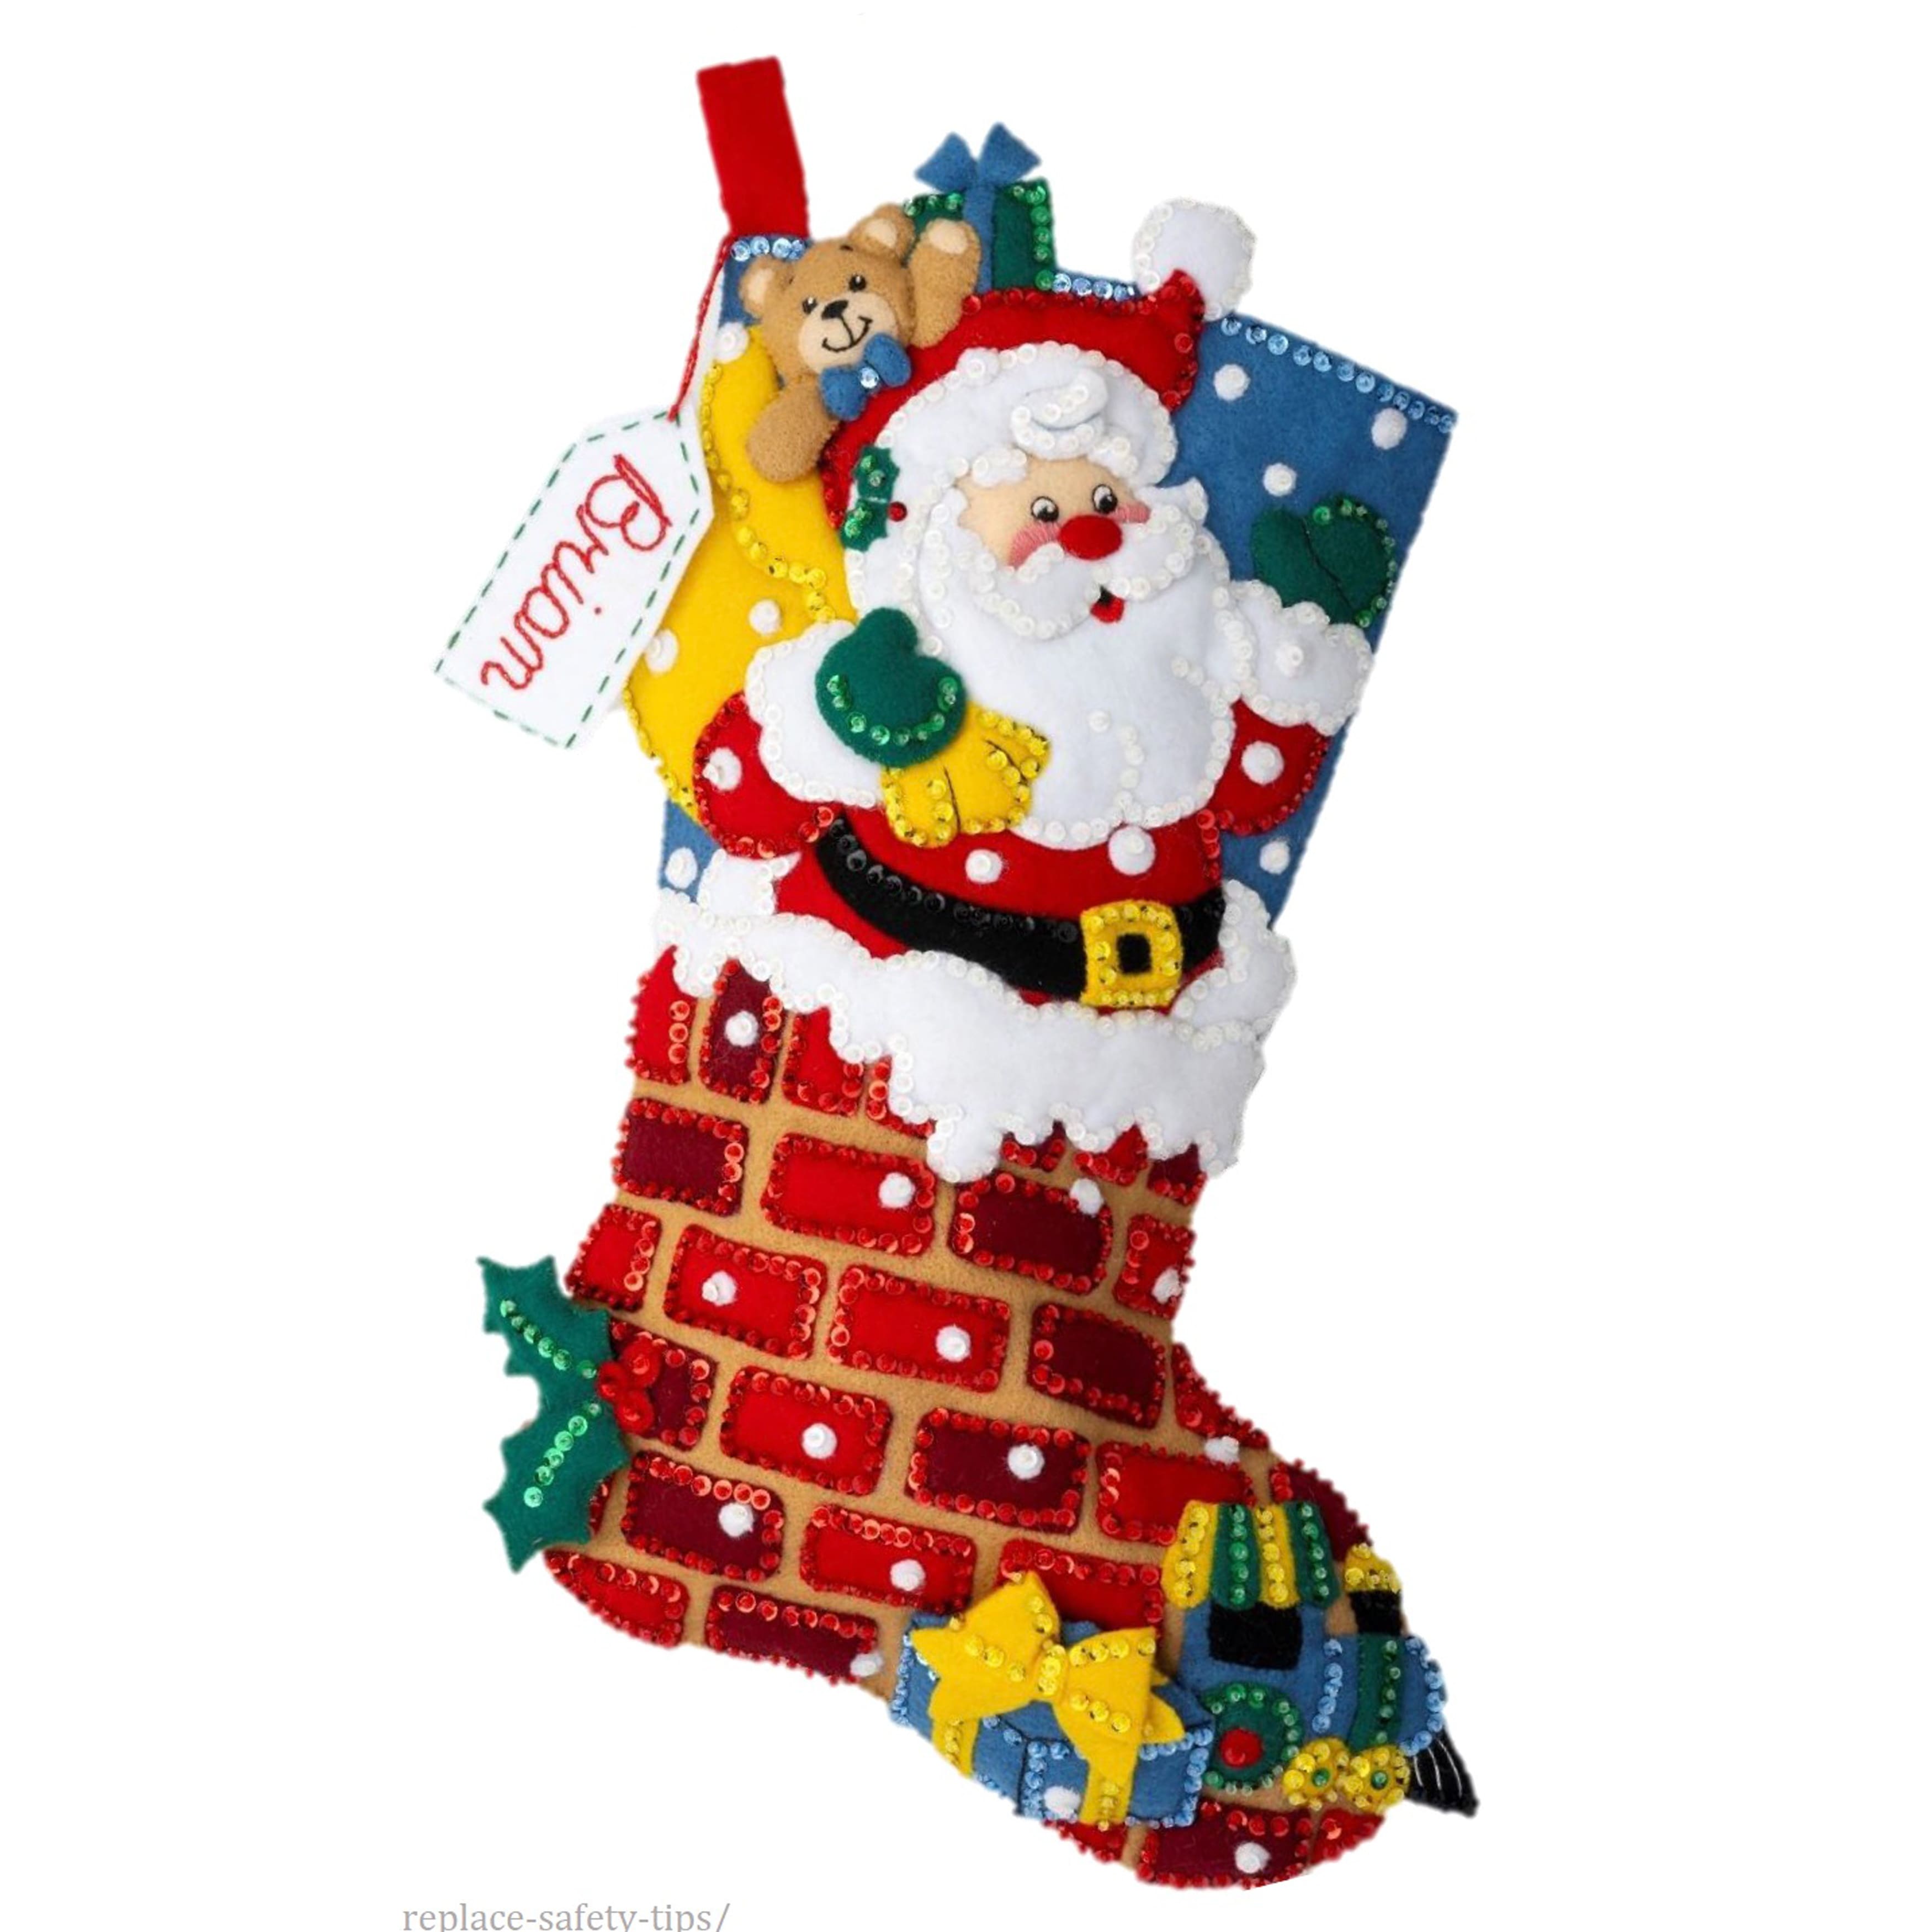 Candy Express Felt Christmas Stocking Kit - Bucilla Felt Stockings